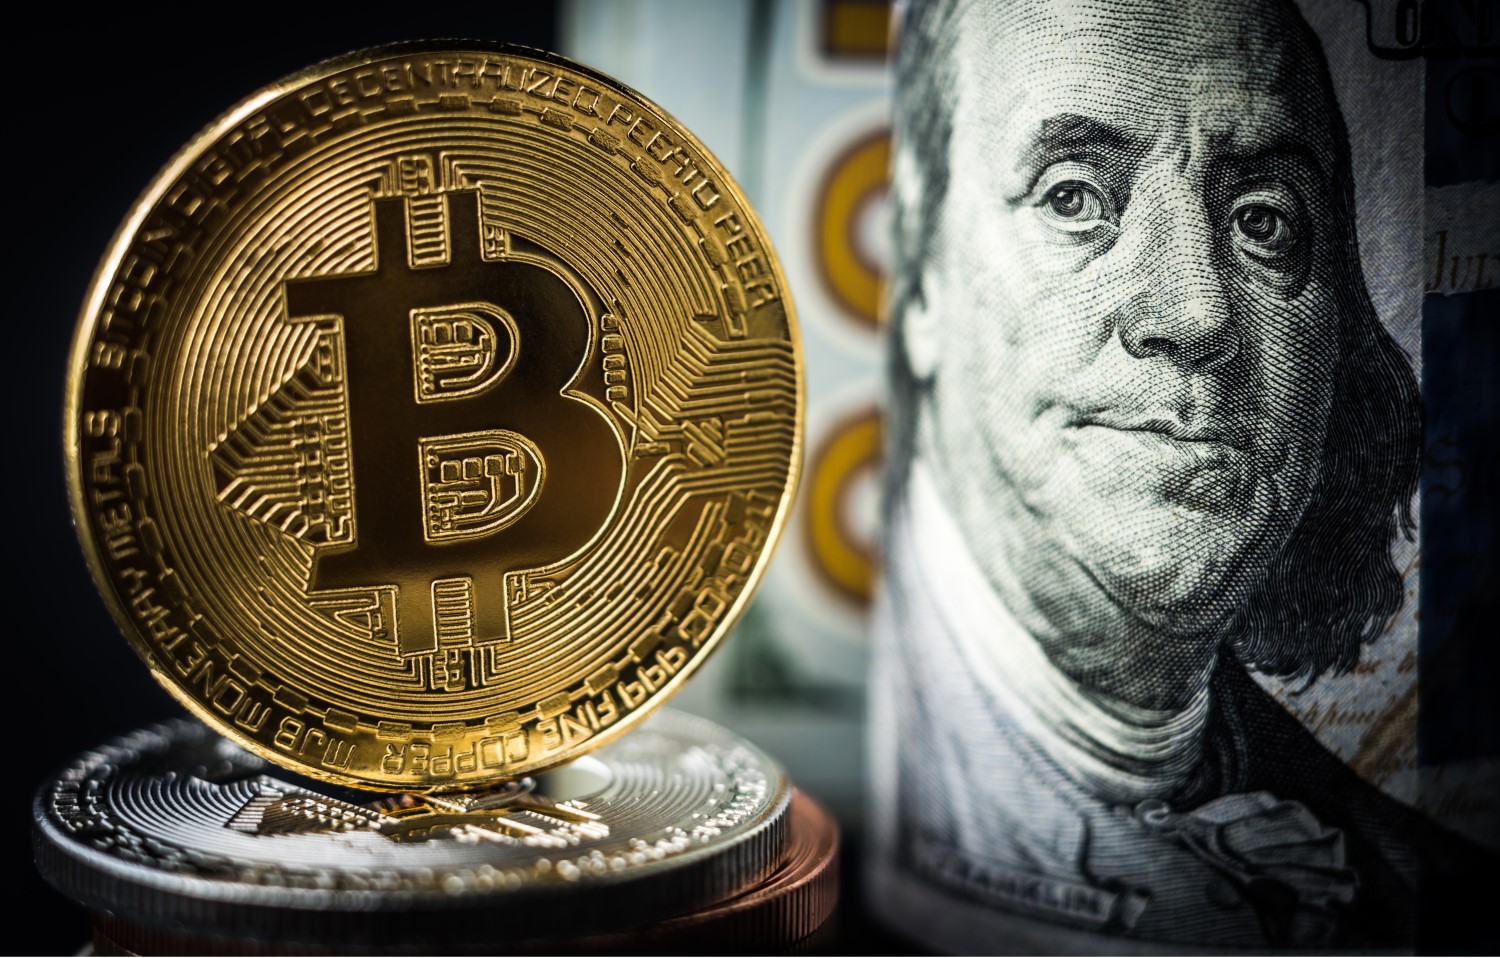 Bitcoin Price Rally Stalls As Ether, XRP Shine